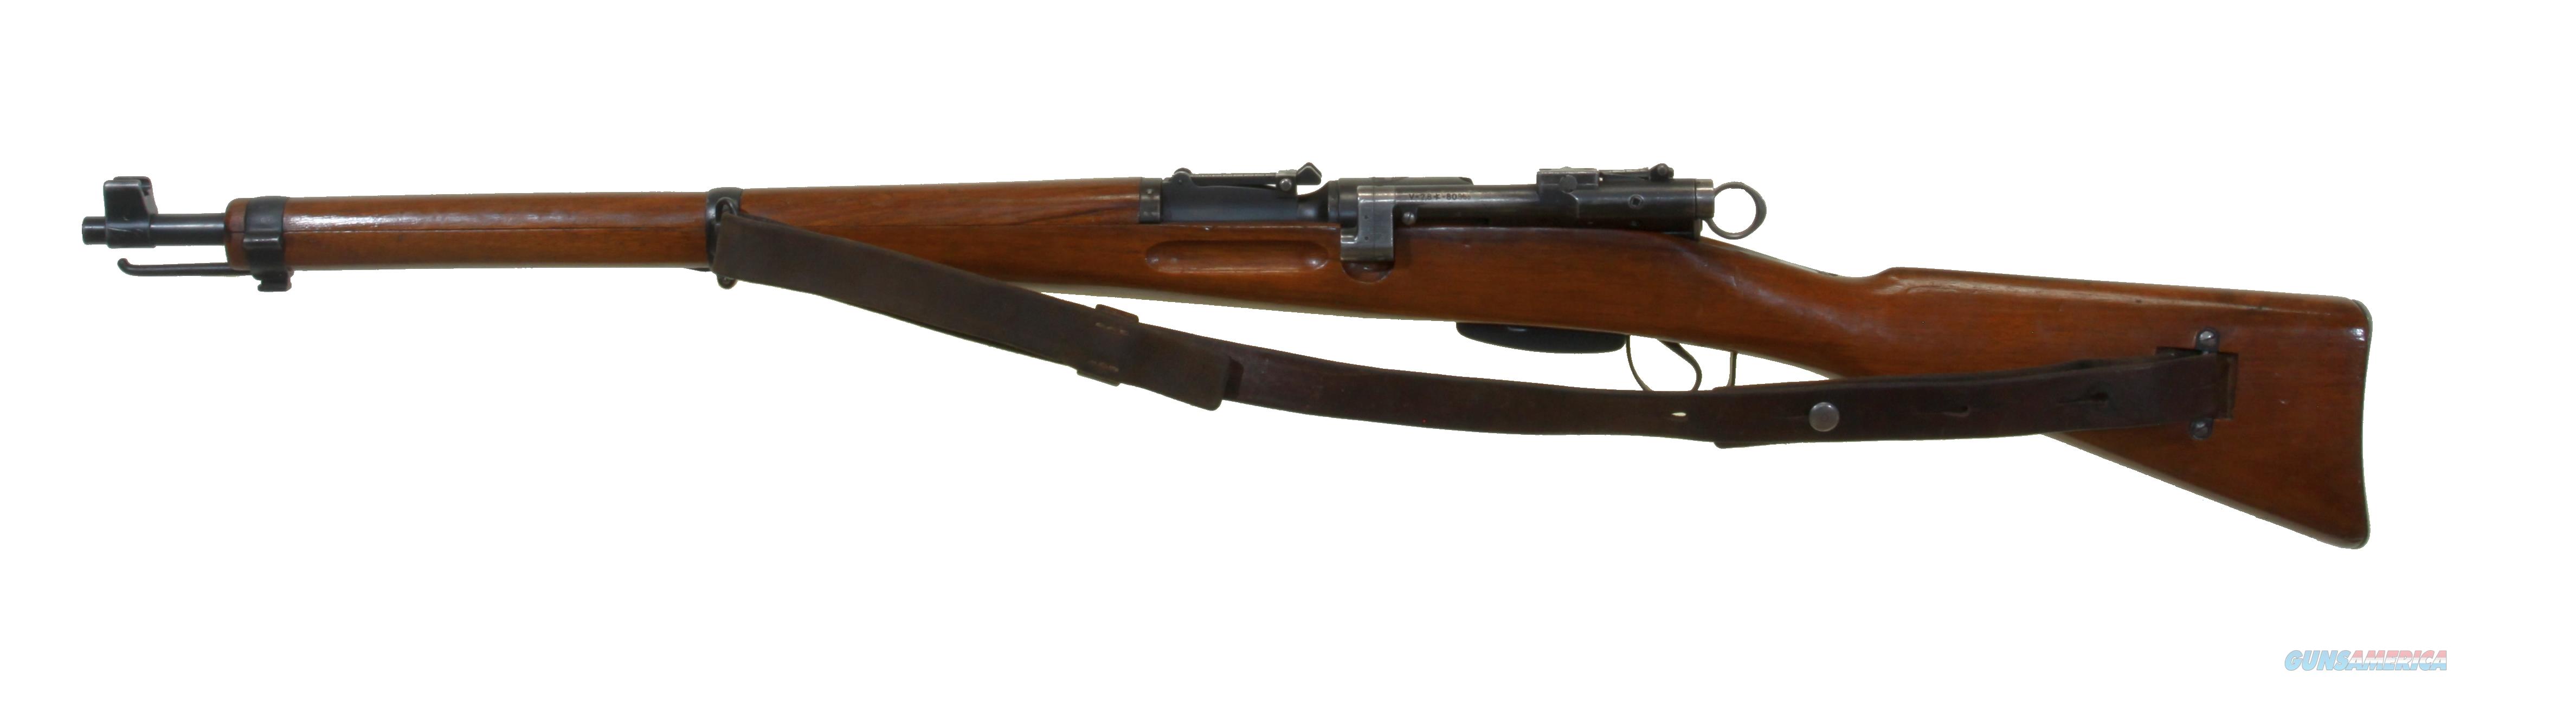 swiss army rifle k31 serial numbers